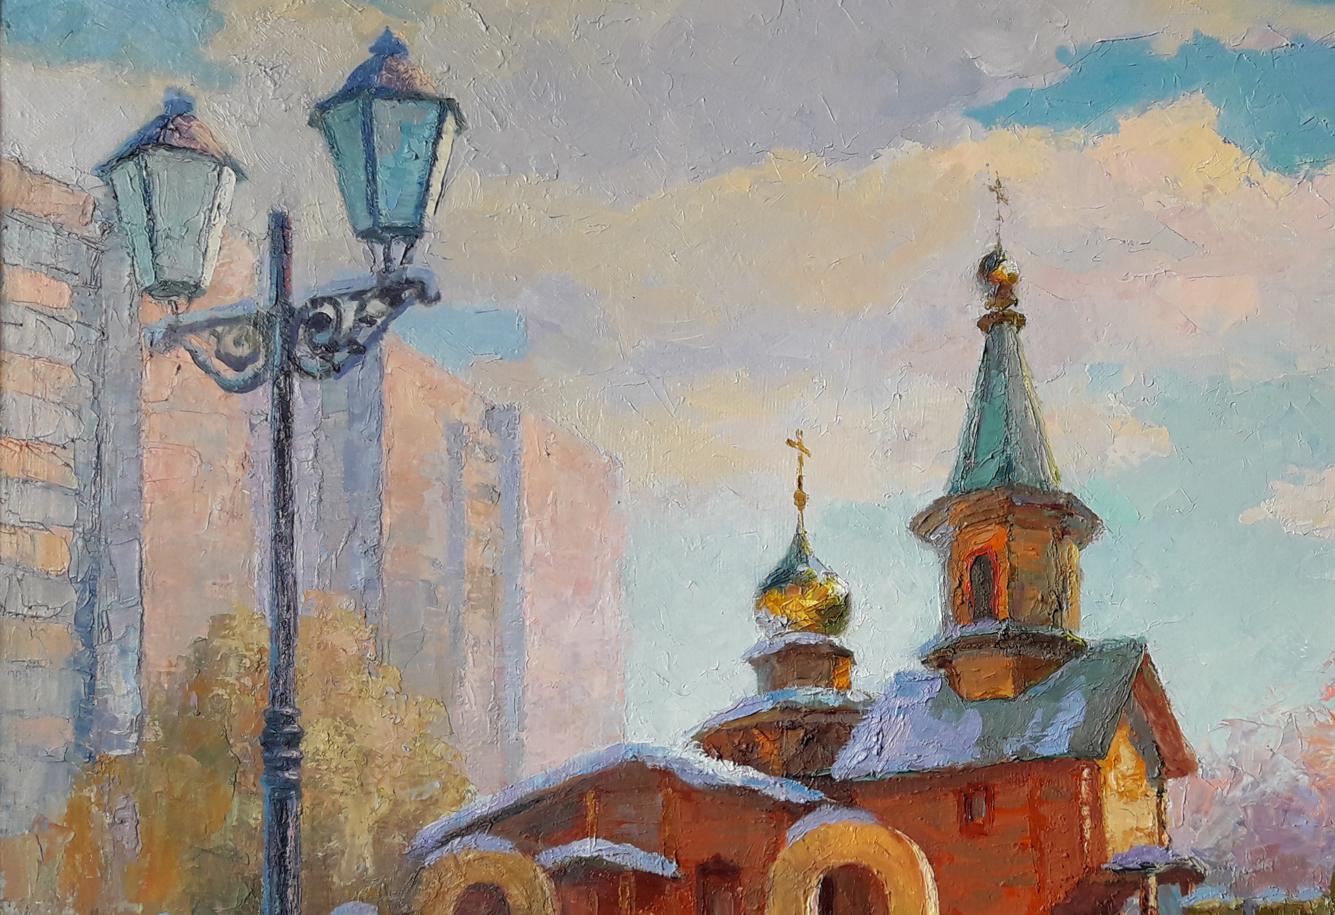 Oil painting Winter day Serdyuk Boris Petrovich №SERB 557